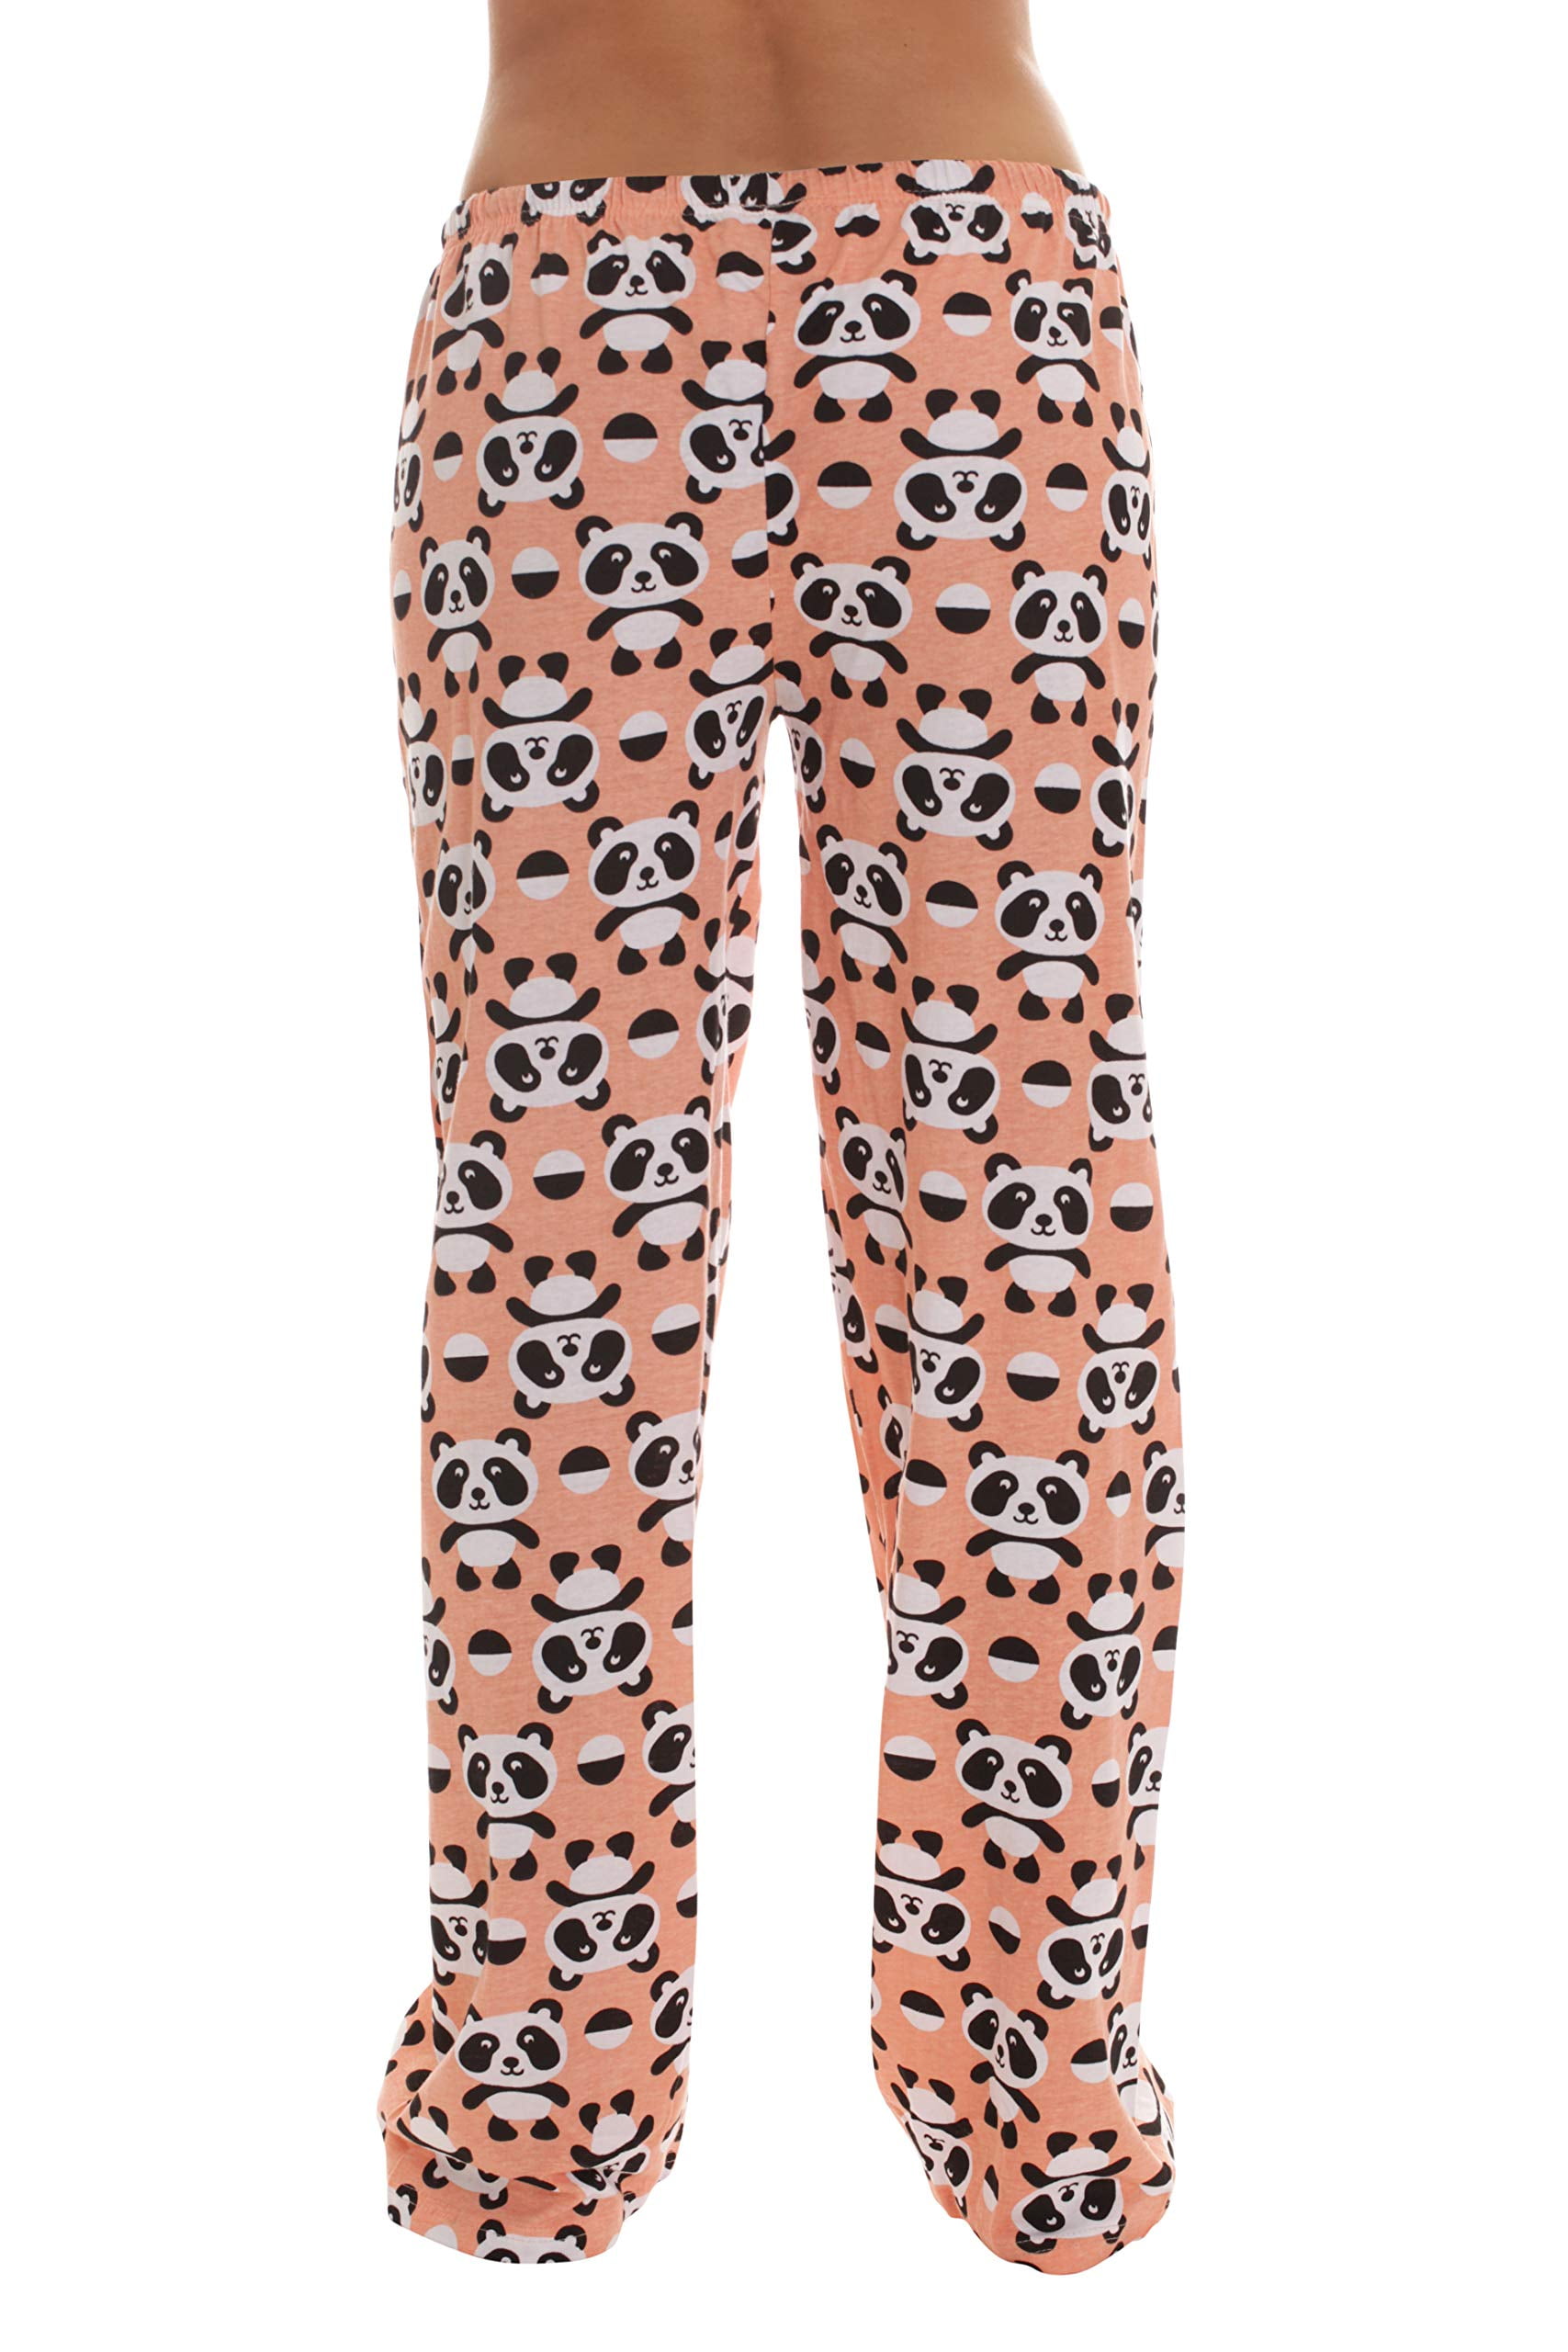 Just Love Women Plaid Pajama Pants Sleepwear 6324-COR-10281-1X (Pink Plaid,  2X) 